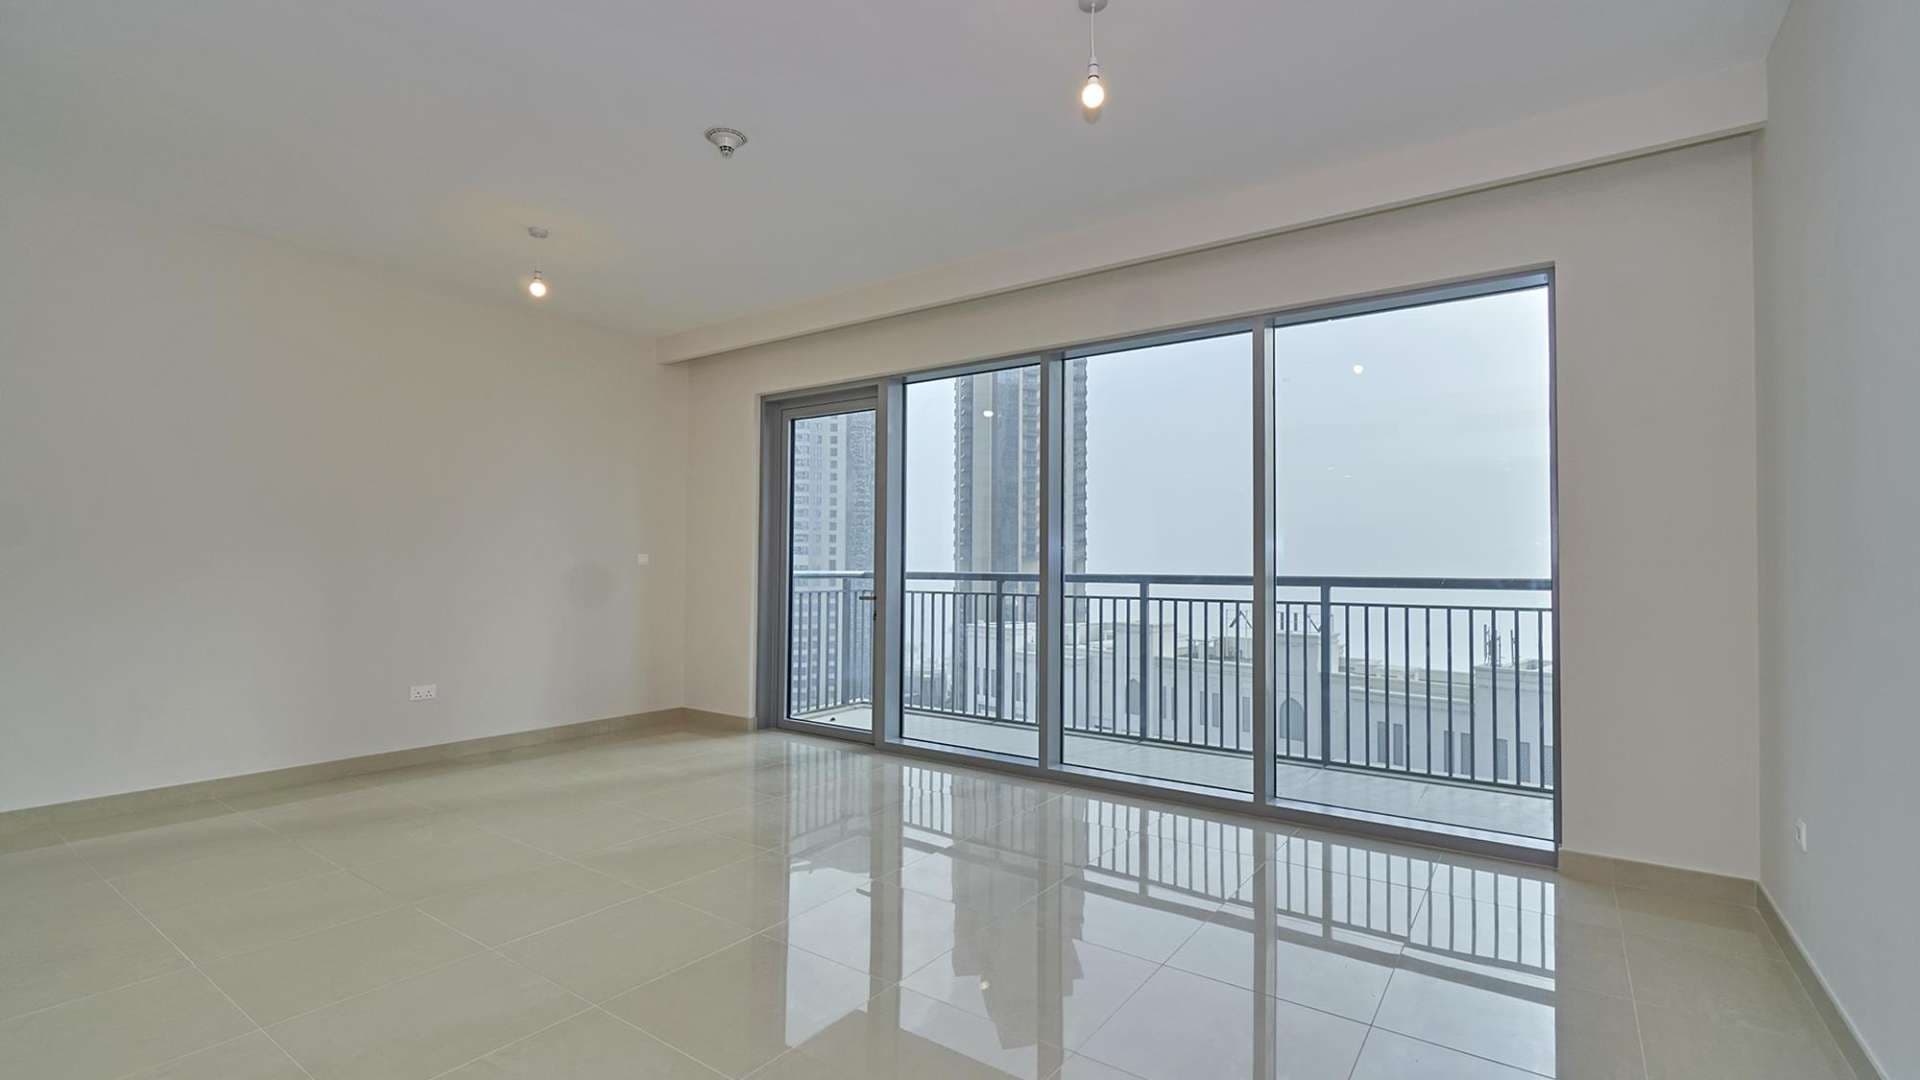 3 Bedroom Apartment For Rent Harbour Views 1 Lp09199 25579c046e47ee00.jpg